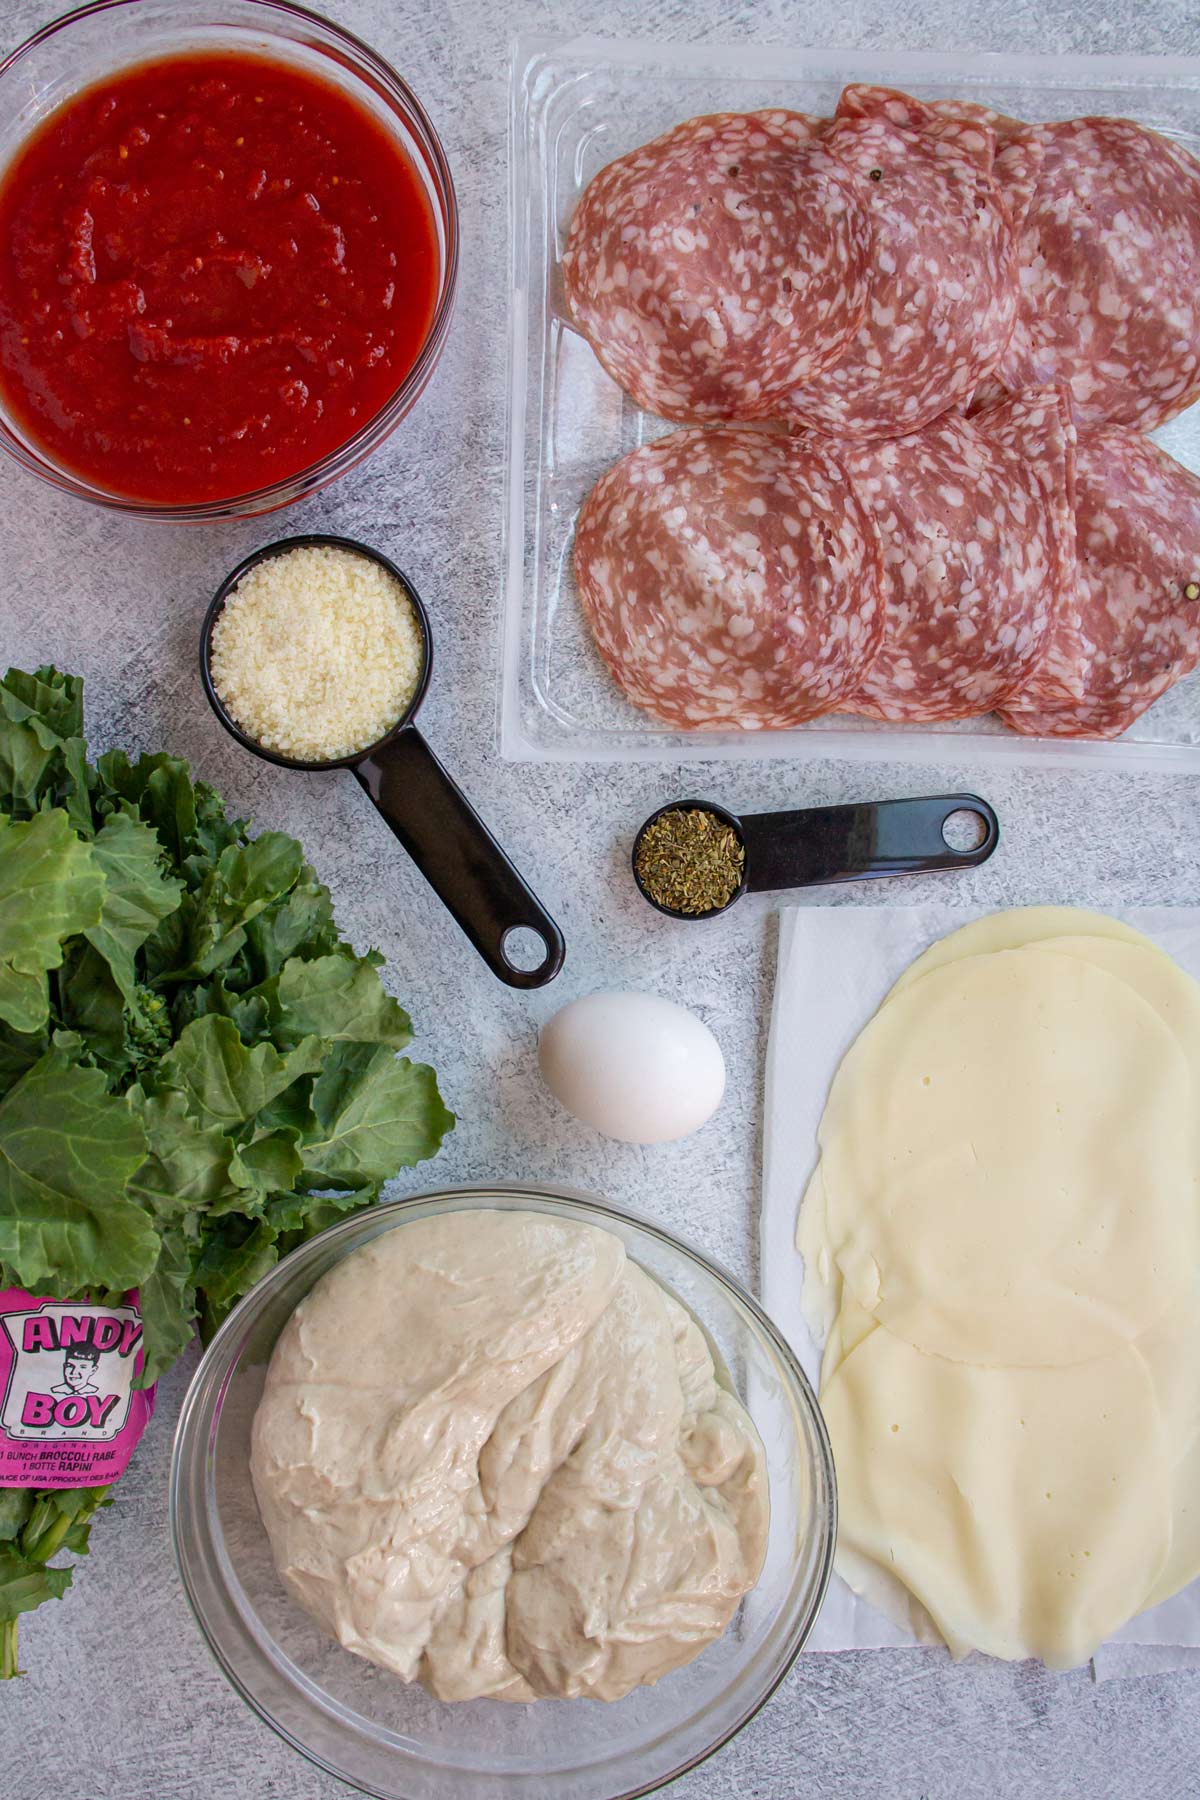 Ingredients for stromboli including soppressata salami, rapini, provolone, pizza, dough, and an egg.